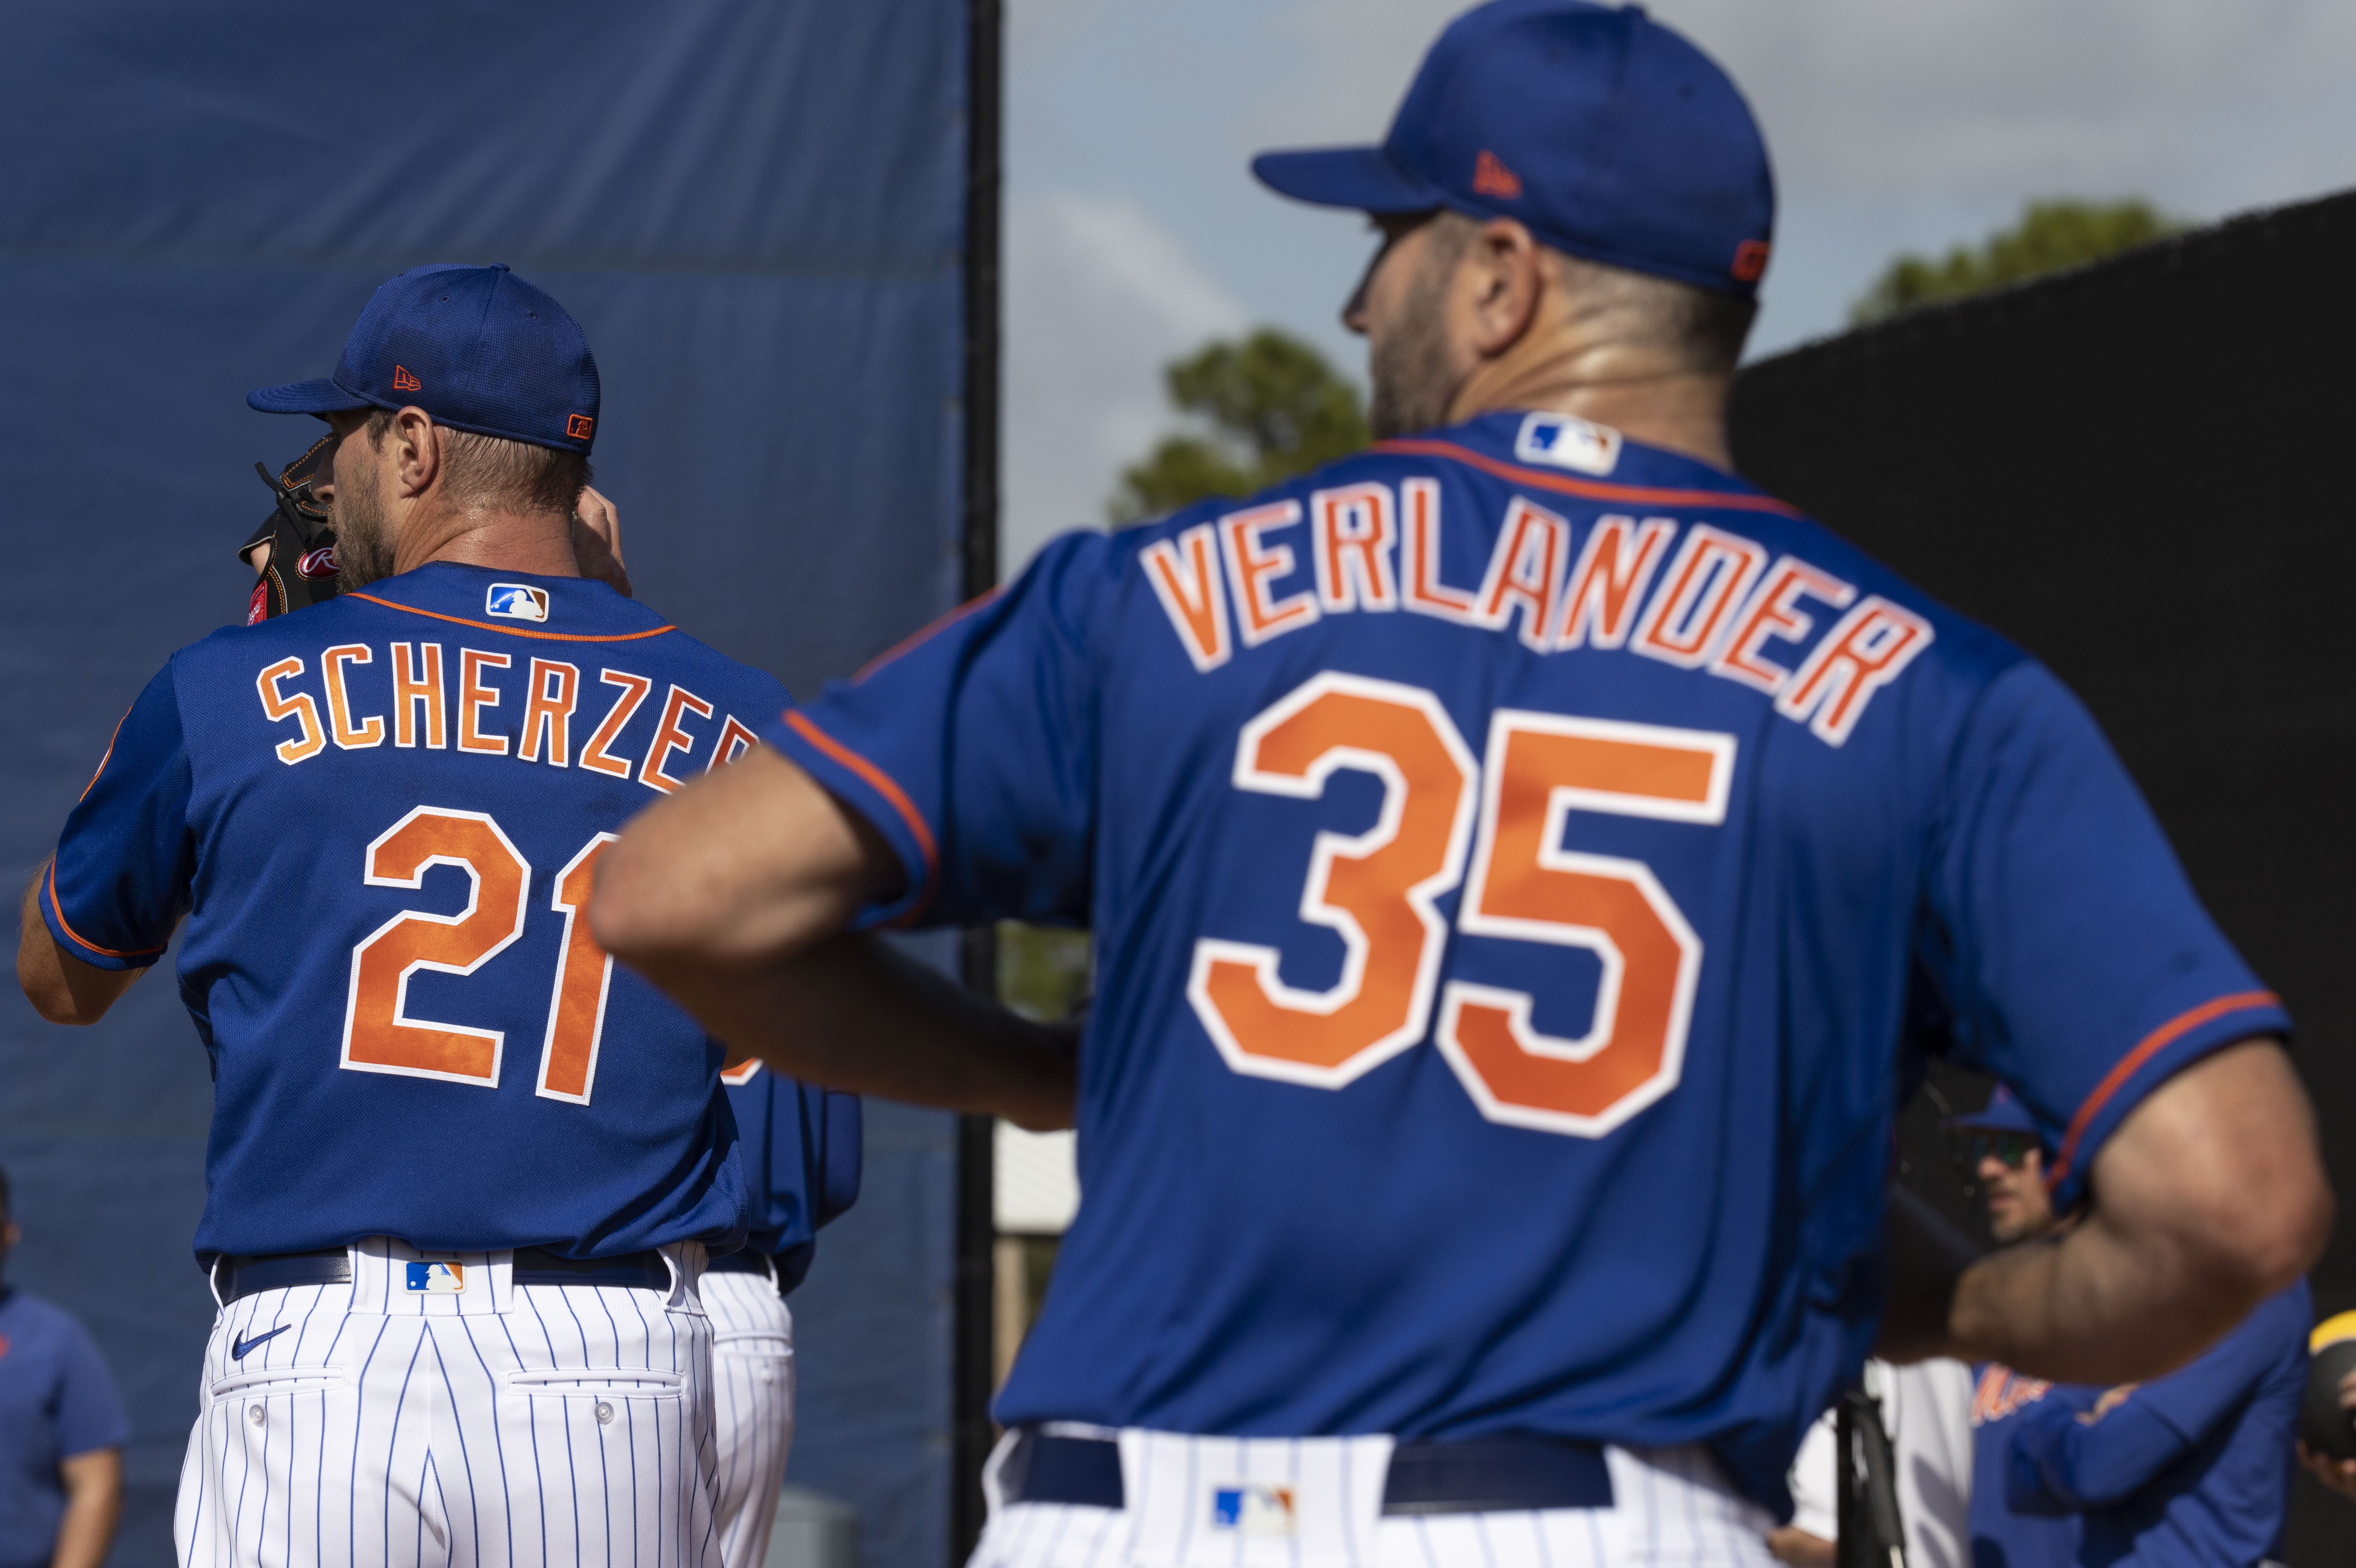 Mets' players discuss new postseason gear - The Washington Post